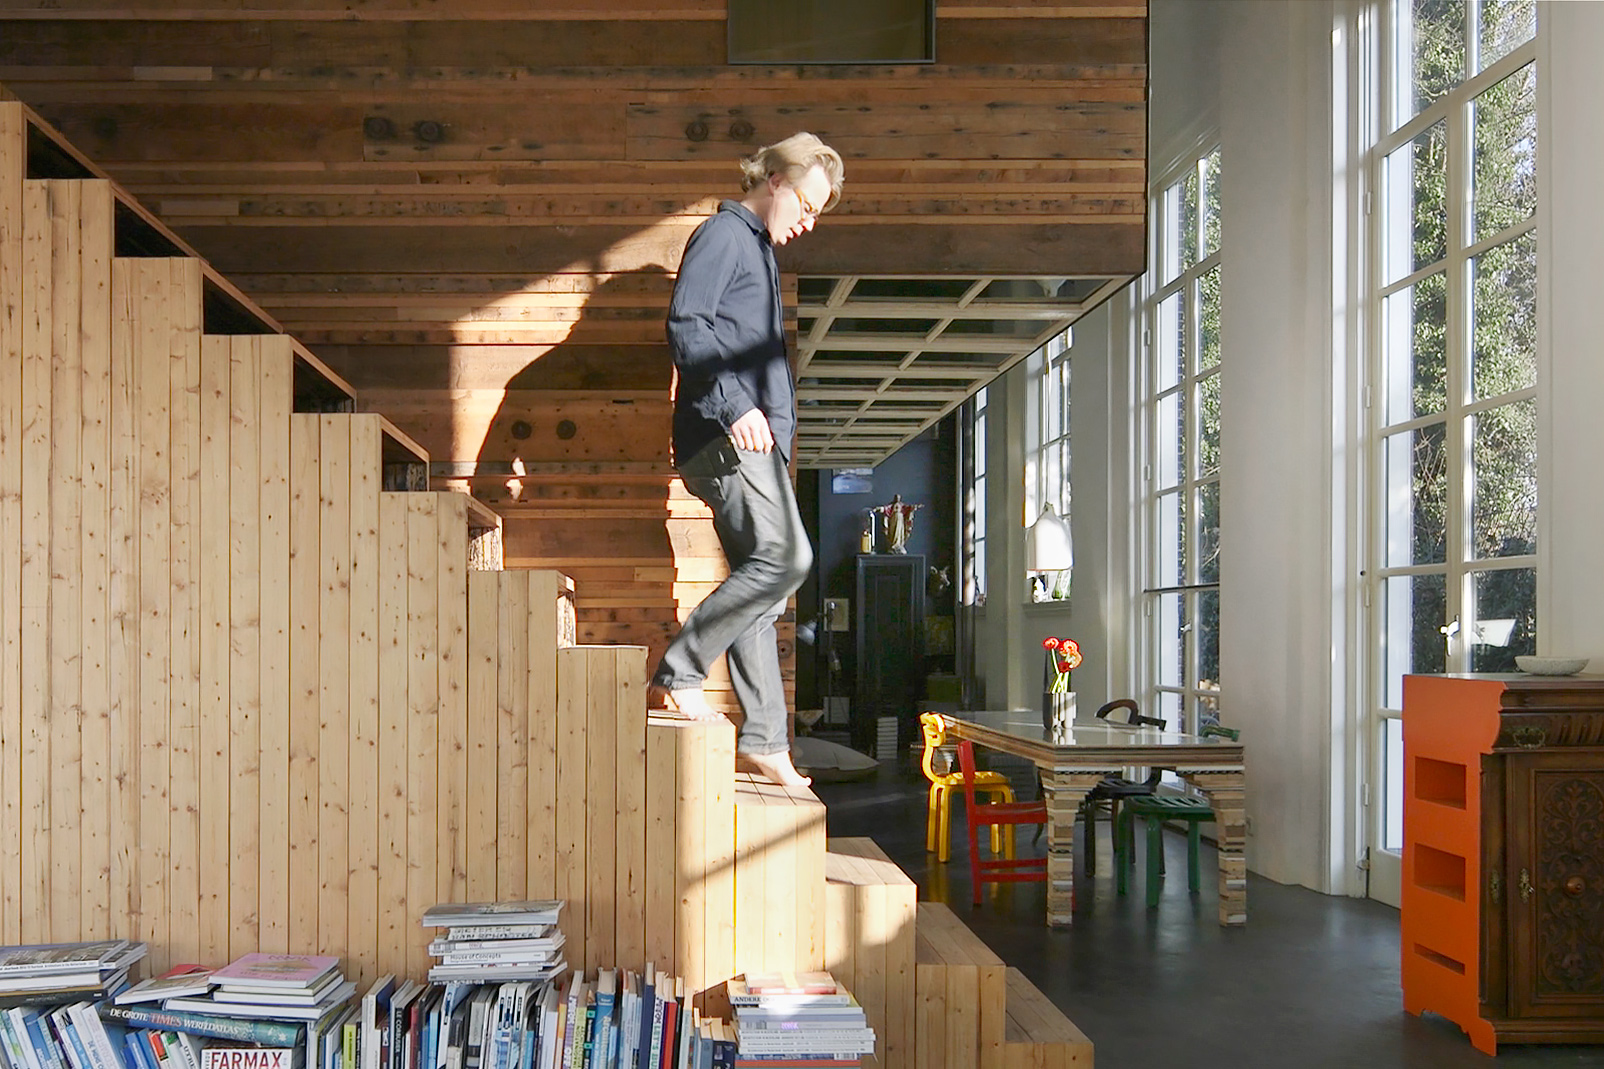 Architectuurvideo kunstenaar Rolf Bruggink | Architectuur video